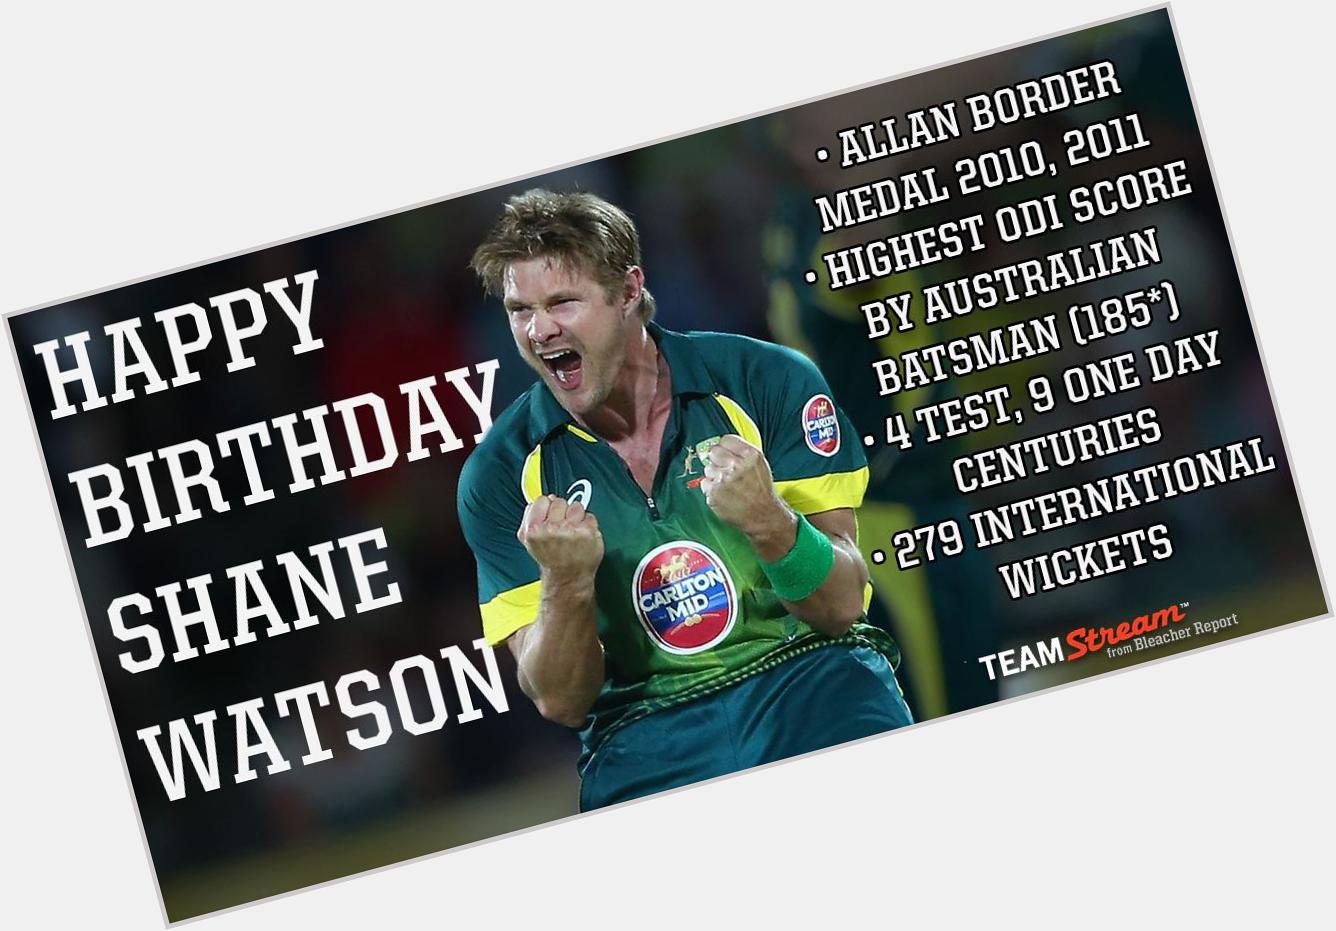 Happy birthday to all-rounder Shane Watson! 